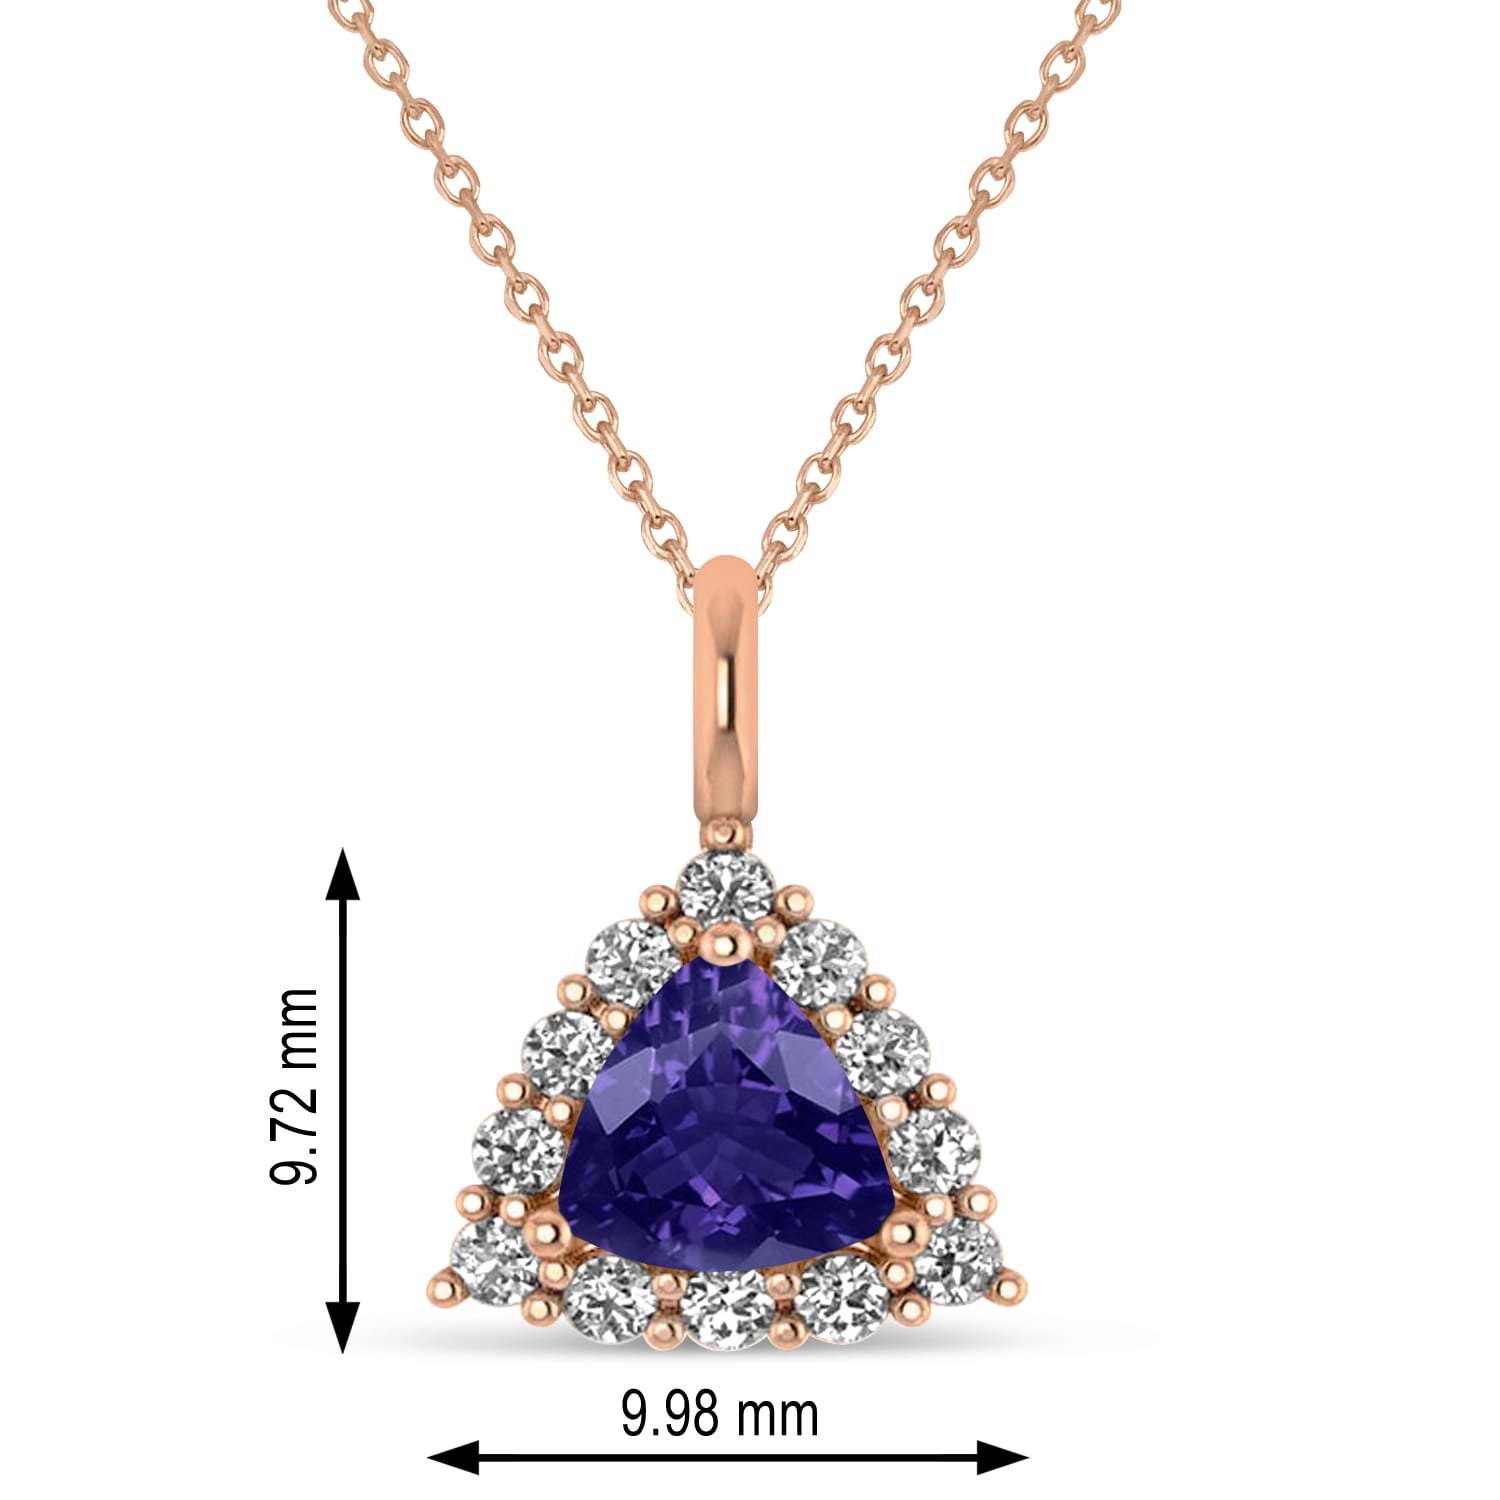 Diamond & Tanzanite Trillion Cut Pendant Necklace 14k Rose Gold (1.53ct)